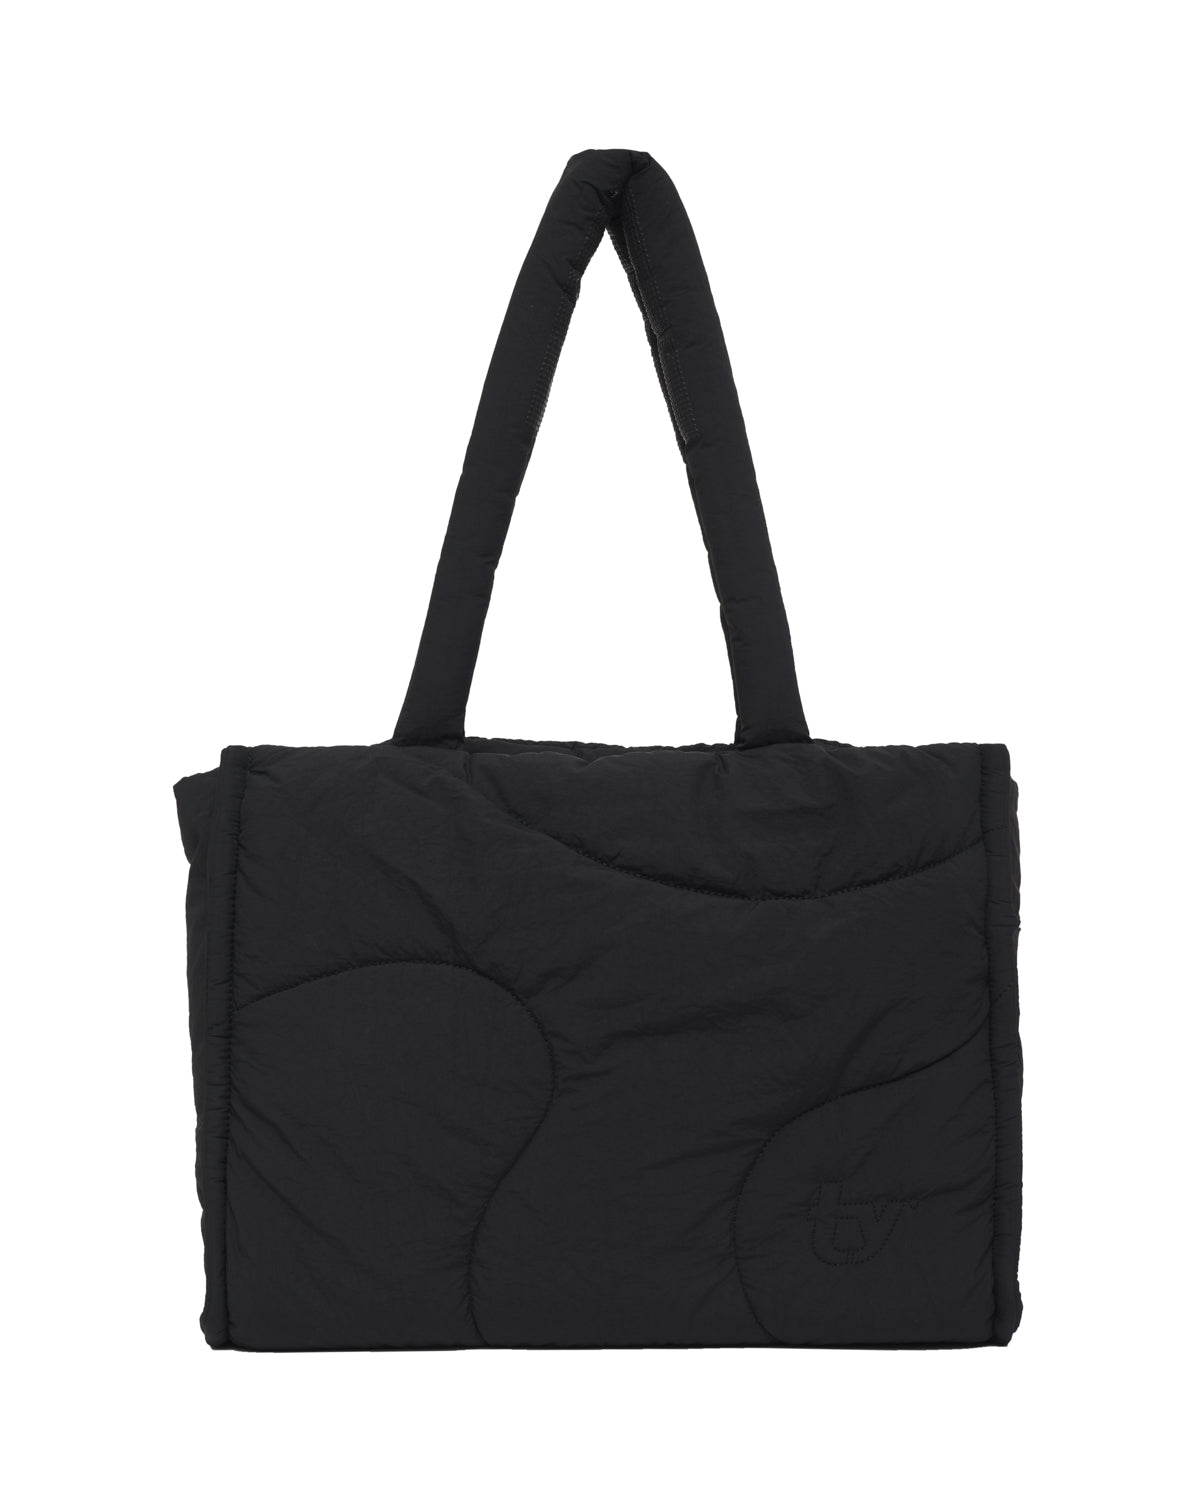 black drift puffer tote bag gym side pocket crossbody strap